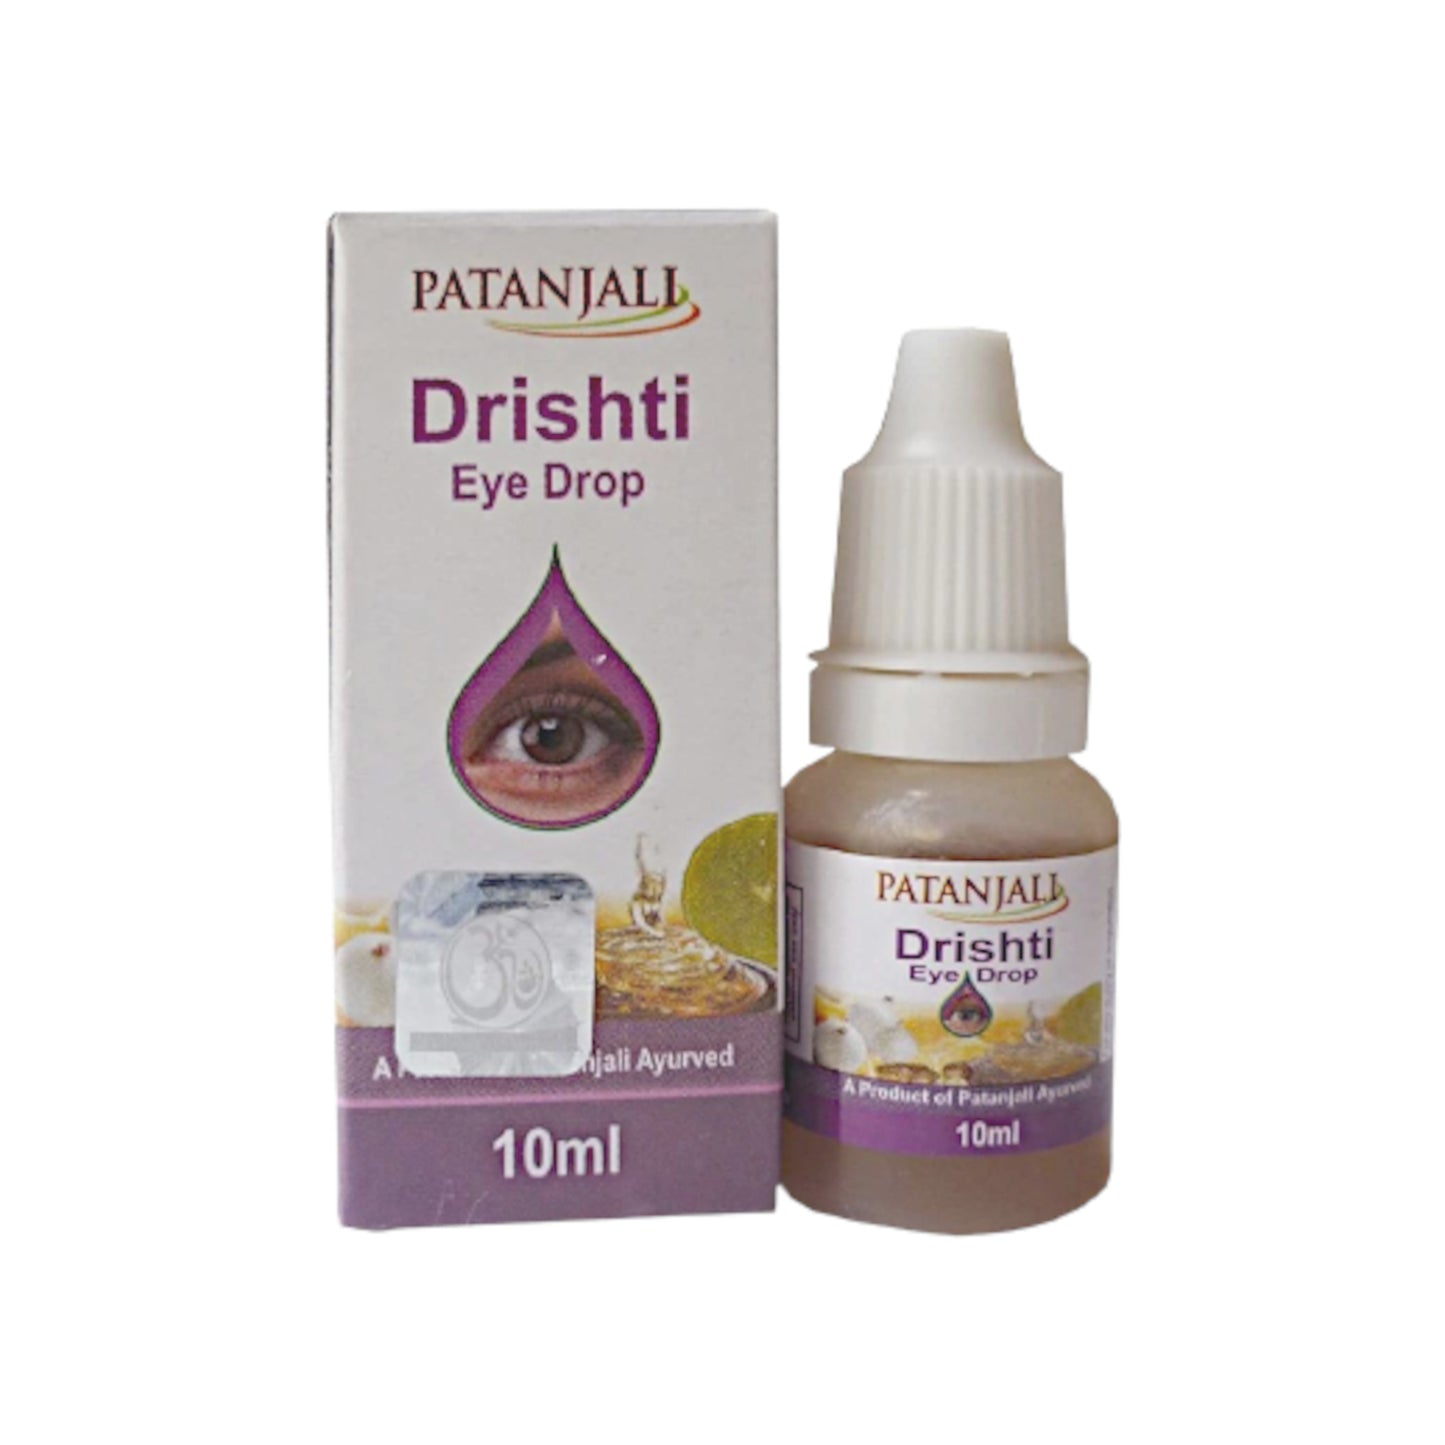 Image for Divya Patanjali Drishti Eye Drops - 10 ml. Ayurvedic eye care remedy for relief from minor eye discomforts.